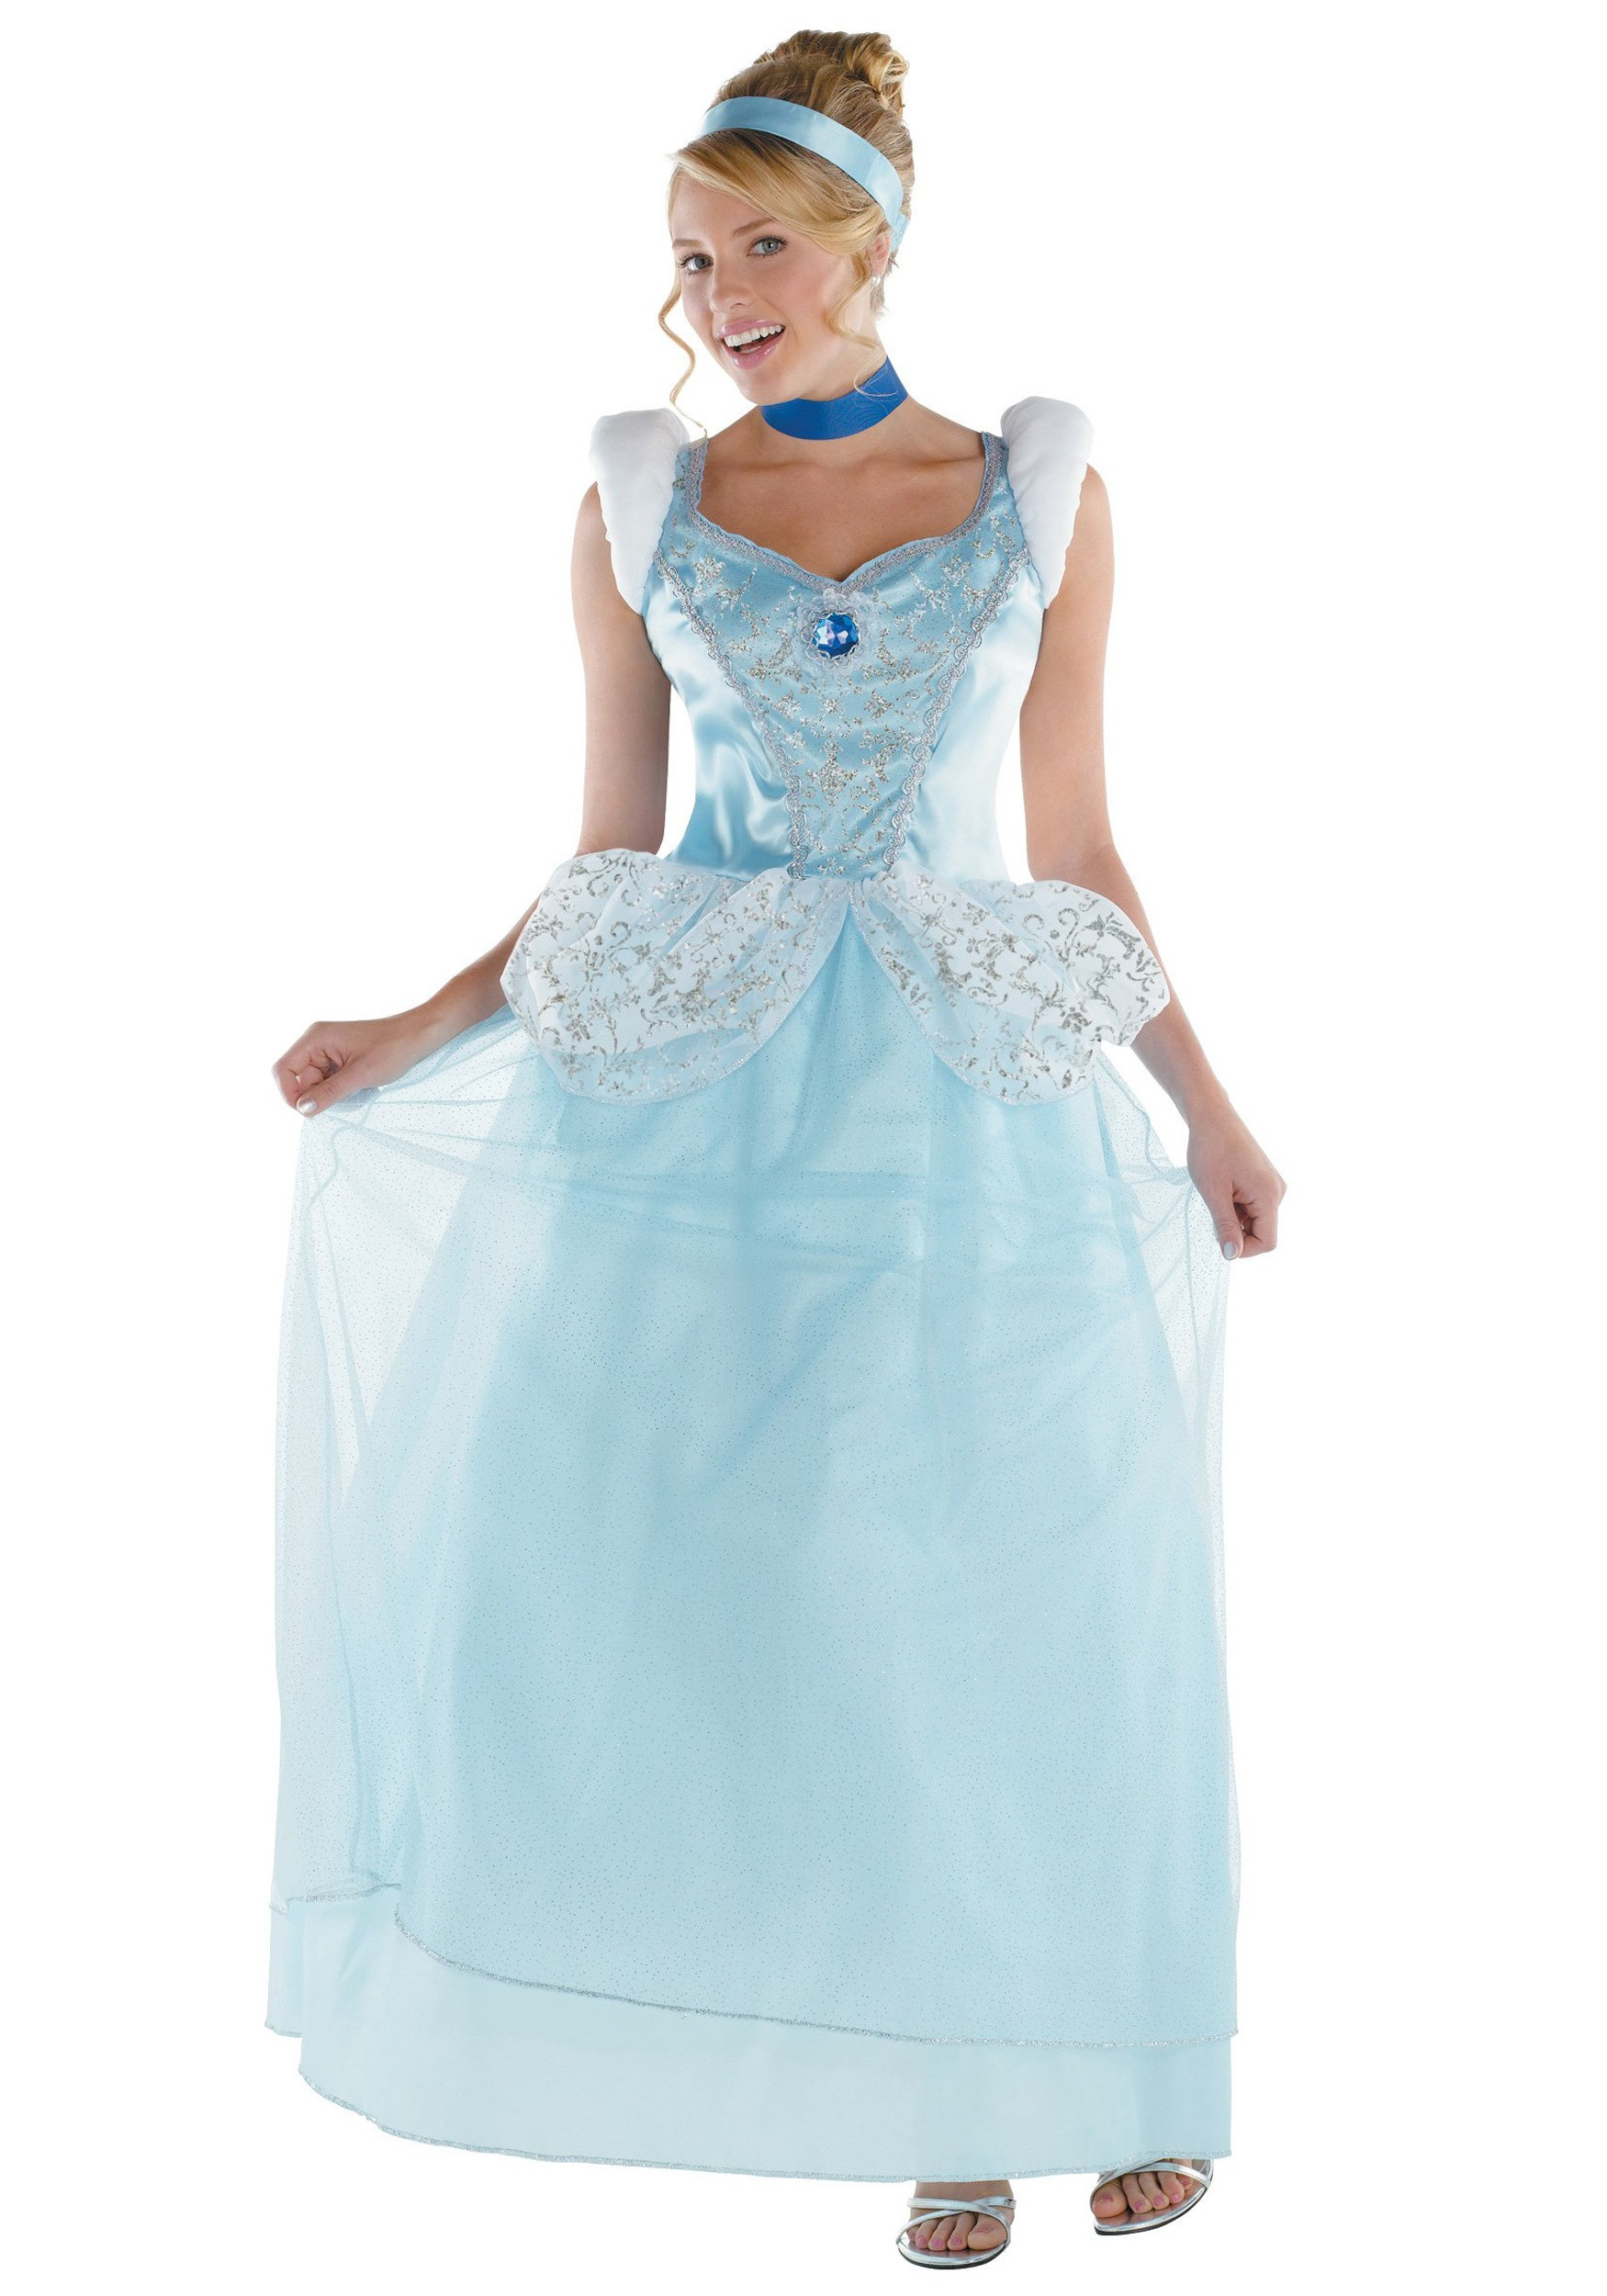 Cinderella DIY Costumes
 Adult Cinderella Costume